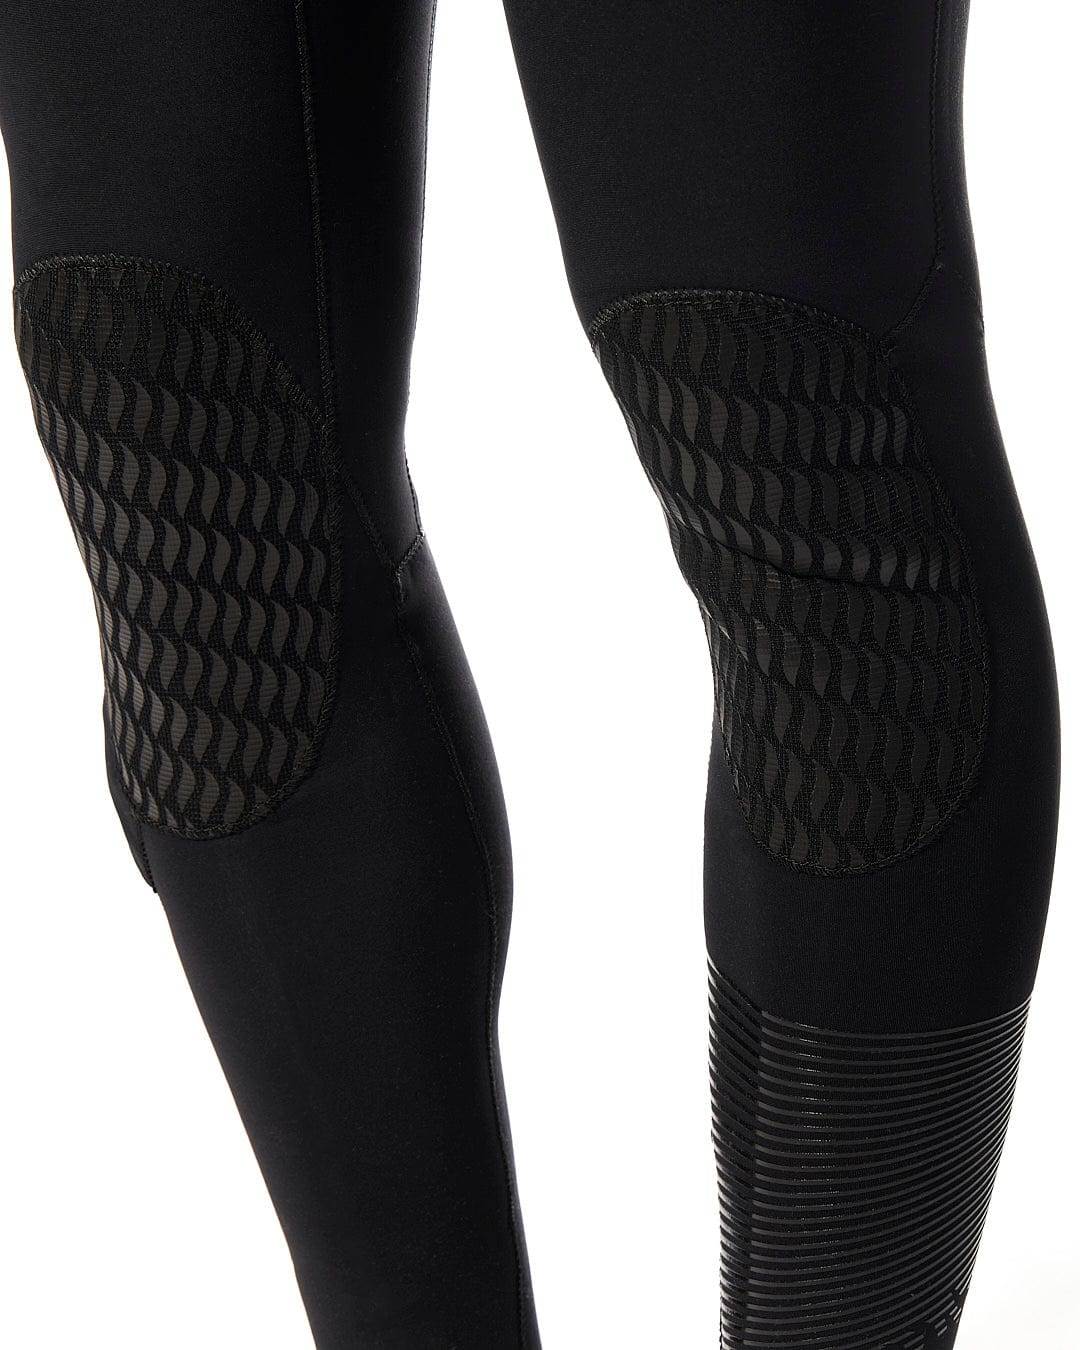 The legs of a man wearing a Saltrock Shockwave - Mens 3/2 Chest Zip Full Wetsuit - Black.